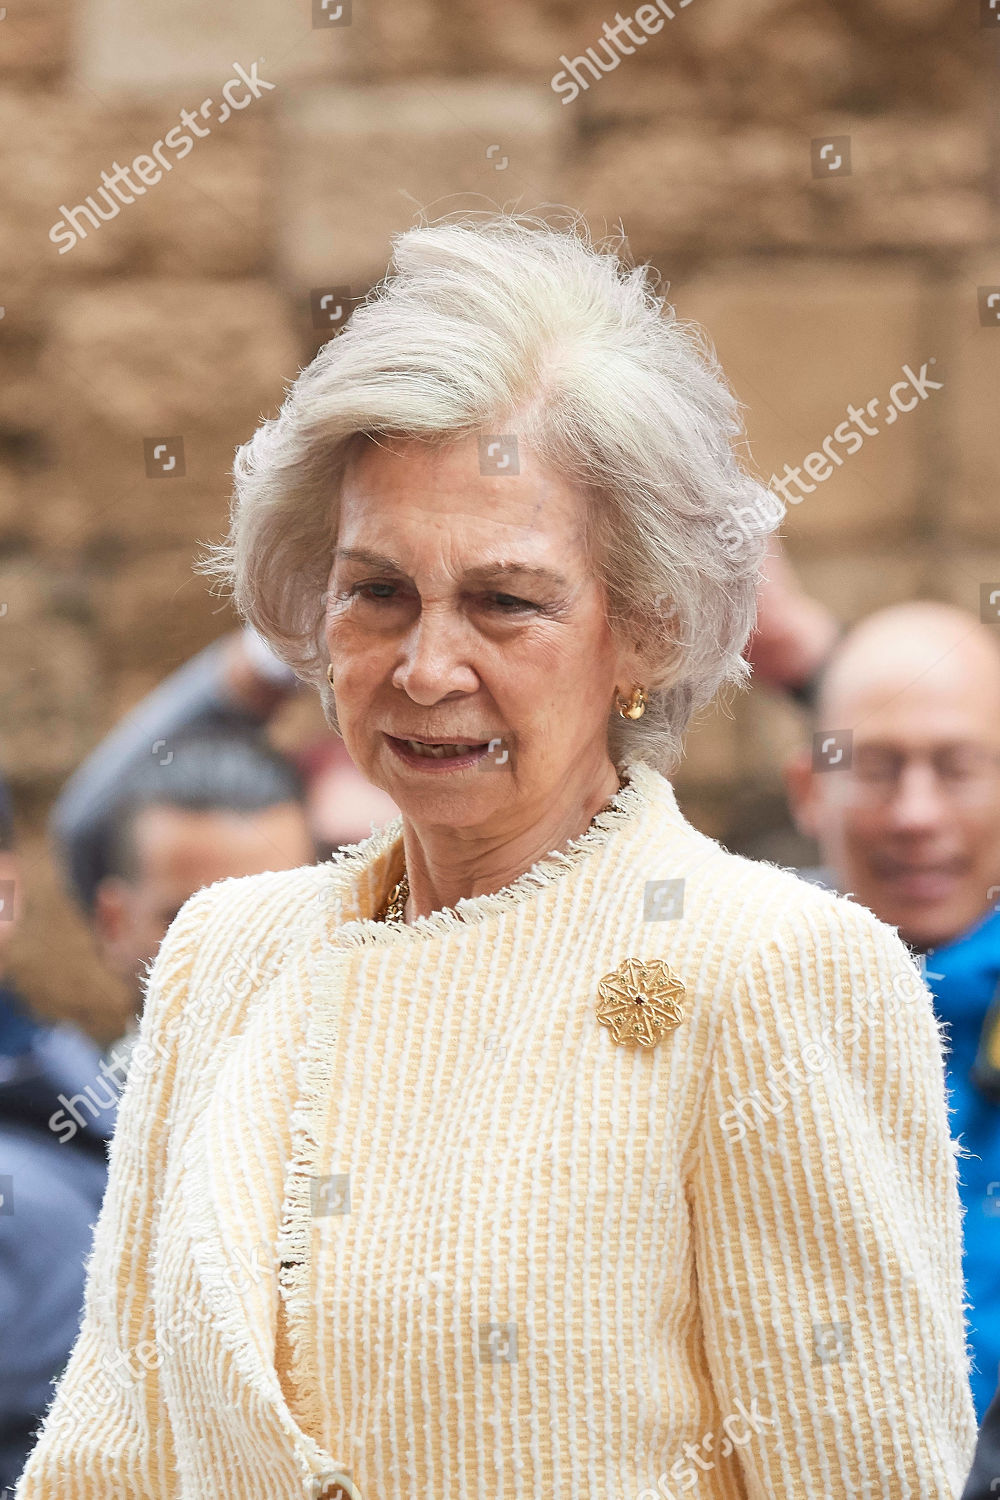 royal-family-attends-mass-in-majorca-palma-de-mallorca-spain-shutterstock-editorial-10215609i.jpg